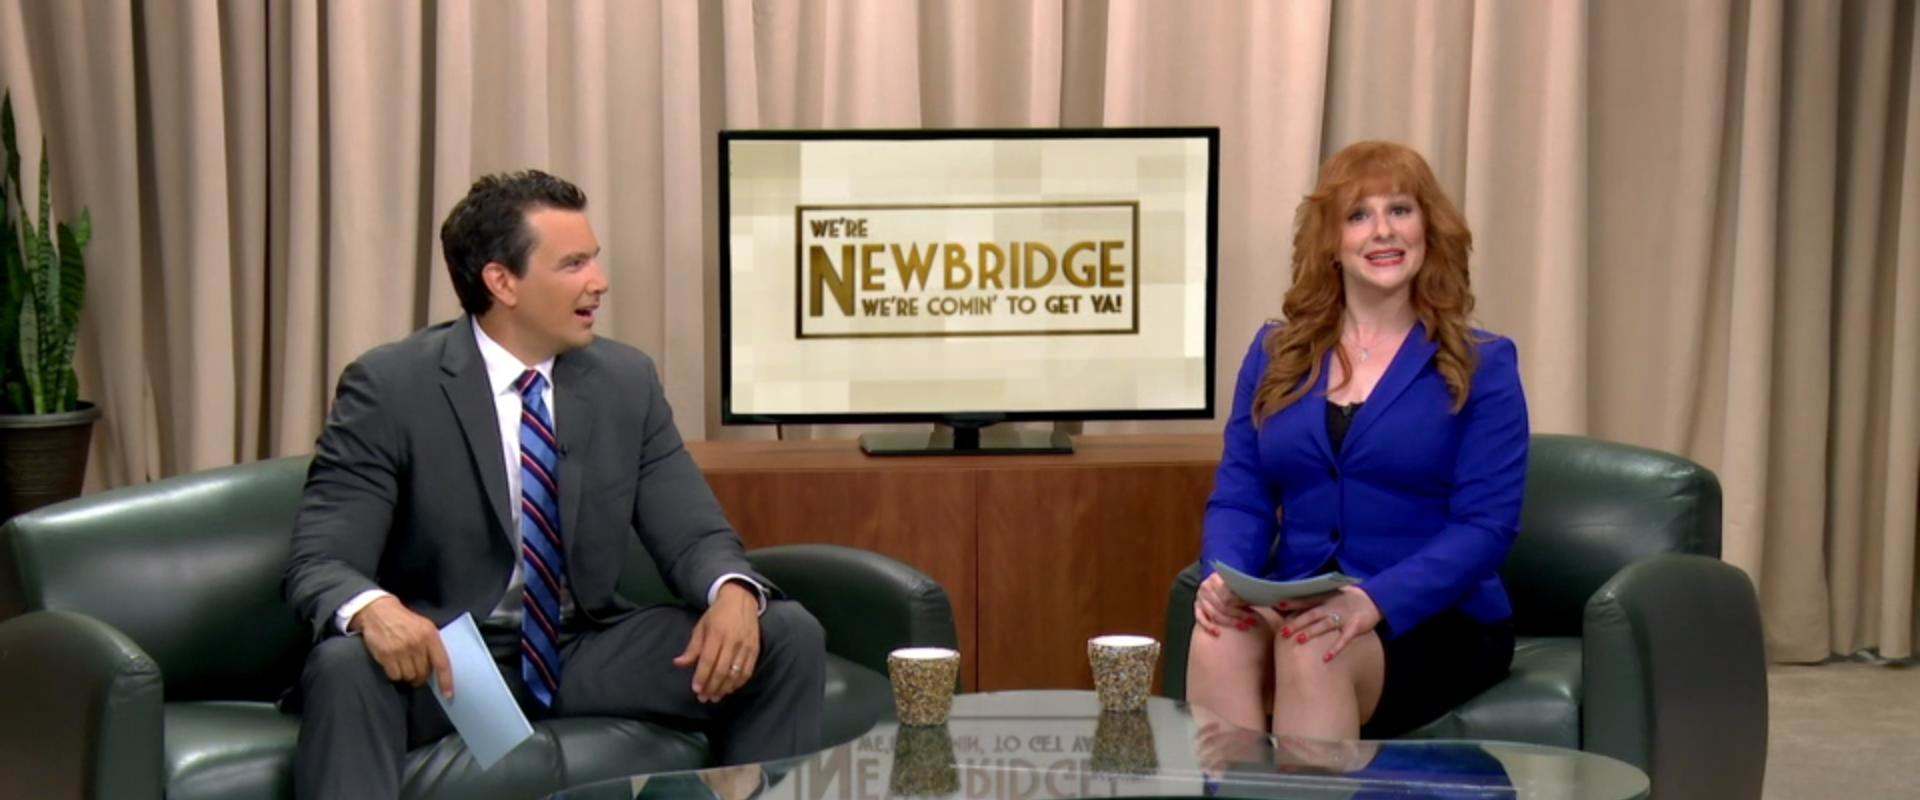 The Newbridge Tourism Board Presents: "We're Newbridge, We're Comin' To Get Ya!" background 2